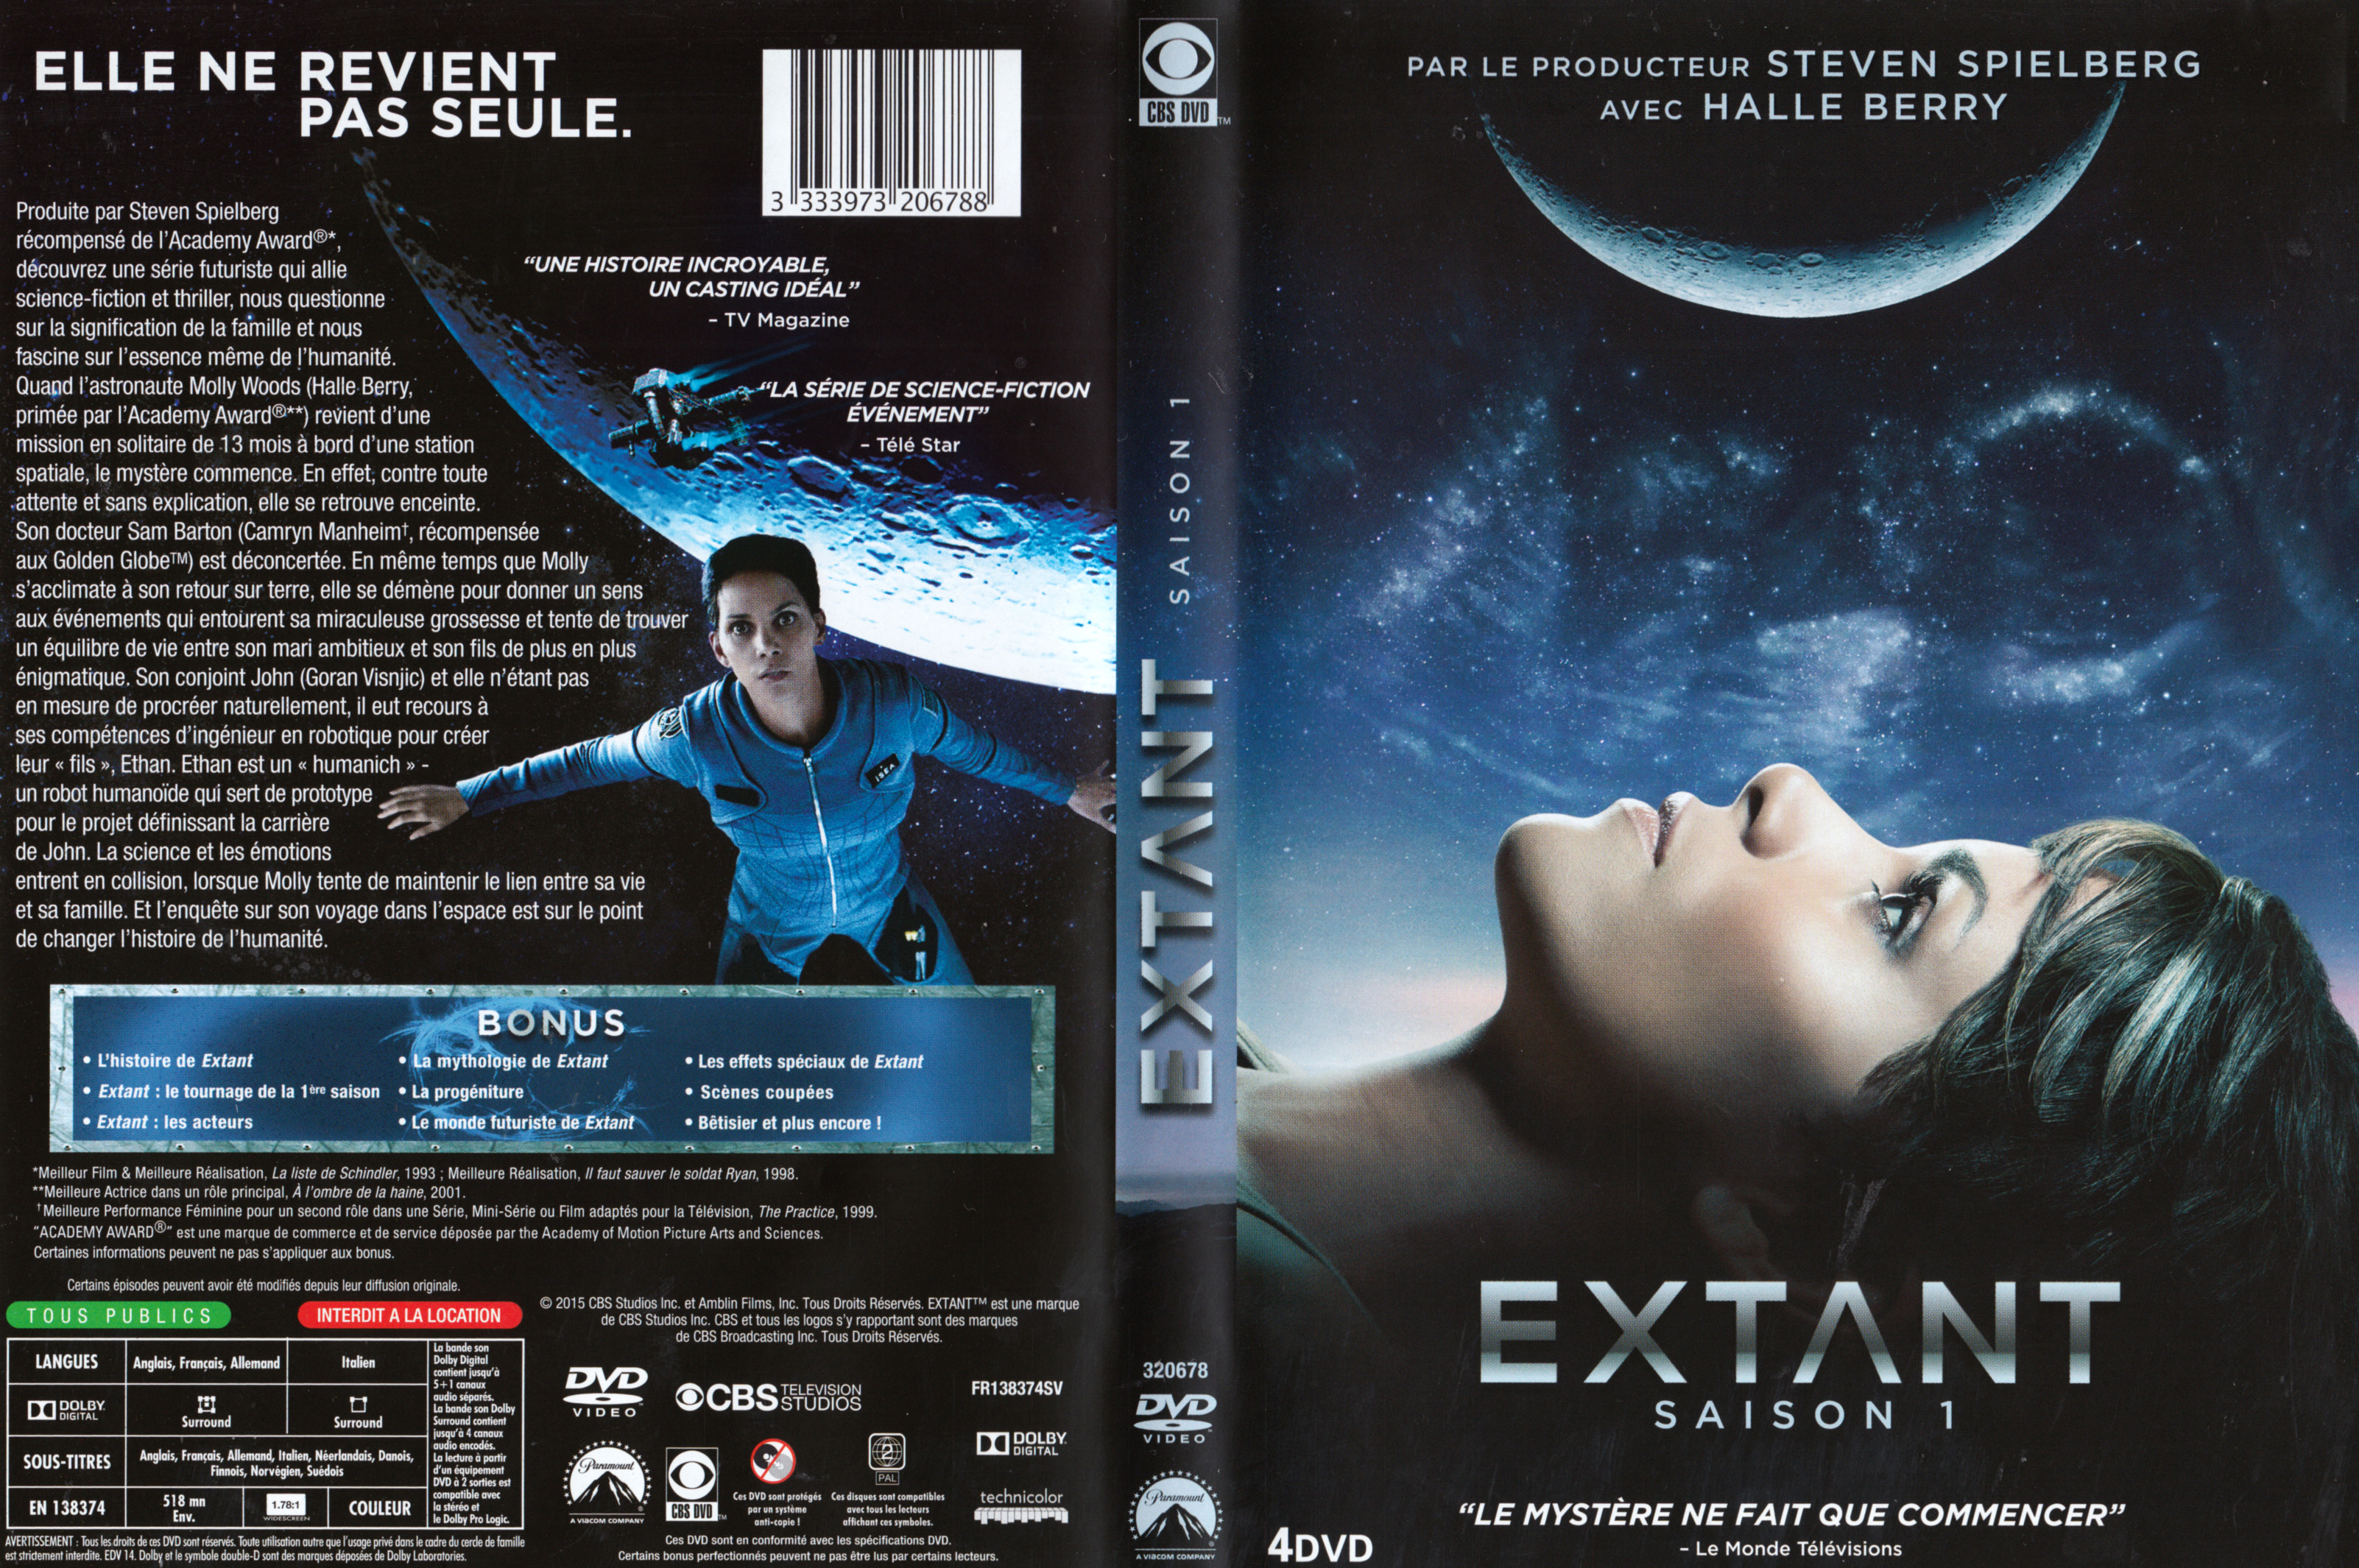 Jaquette DVD Extant saison 1 (BLU-RAY)